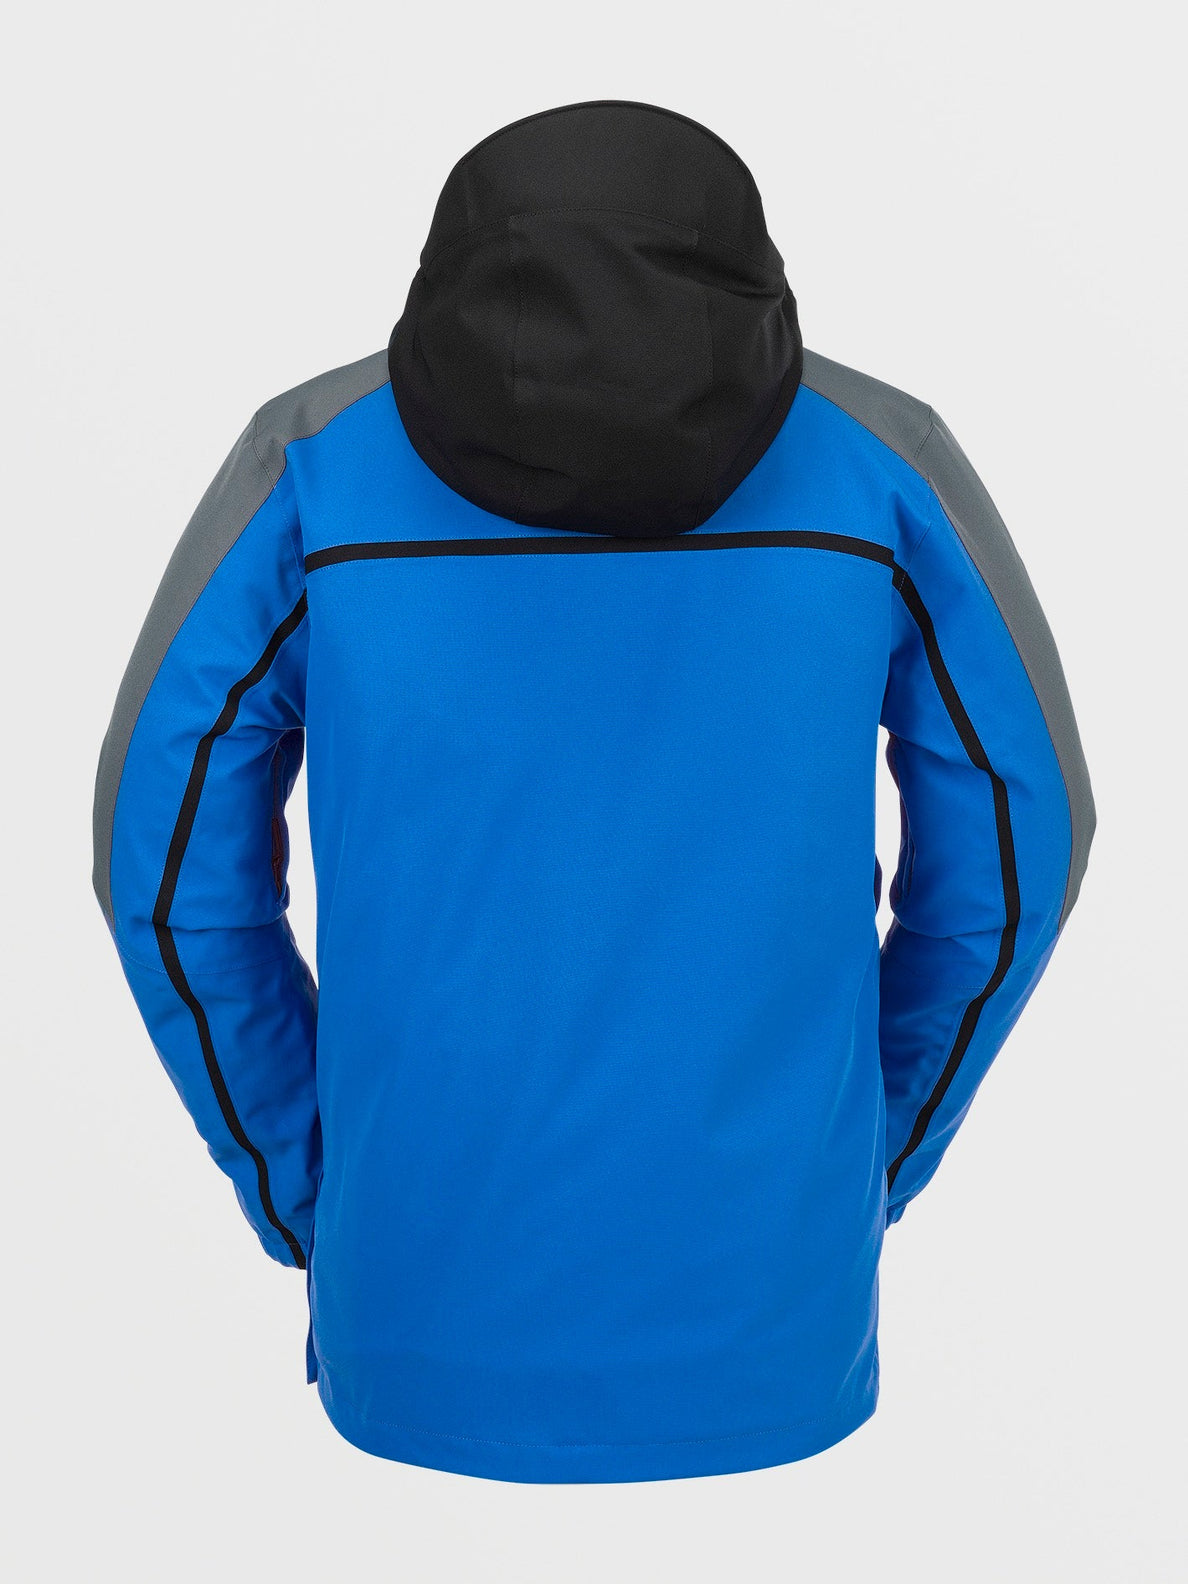 Brighton jacket - ELECTRIC BLUE (G0652408_EBL) [B]